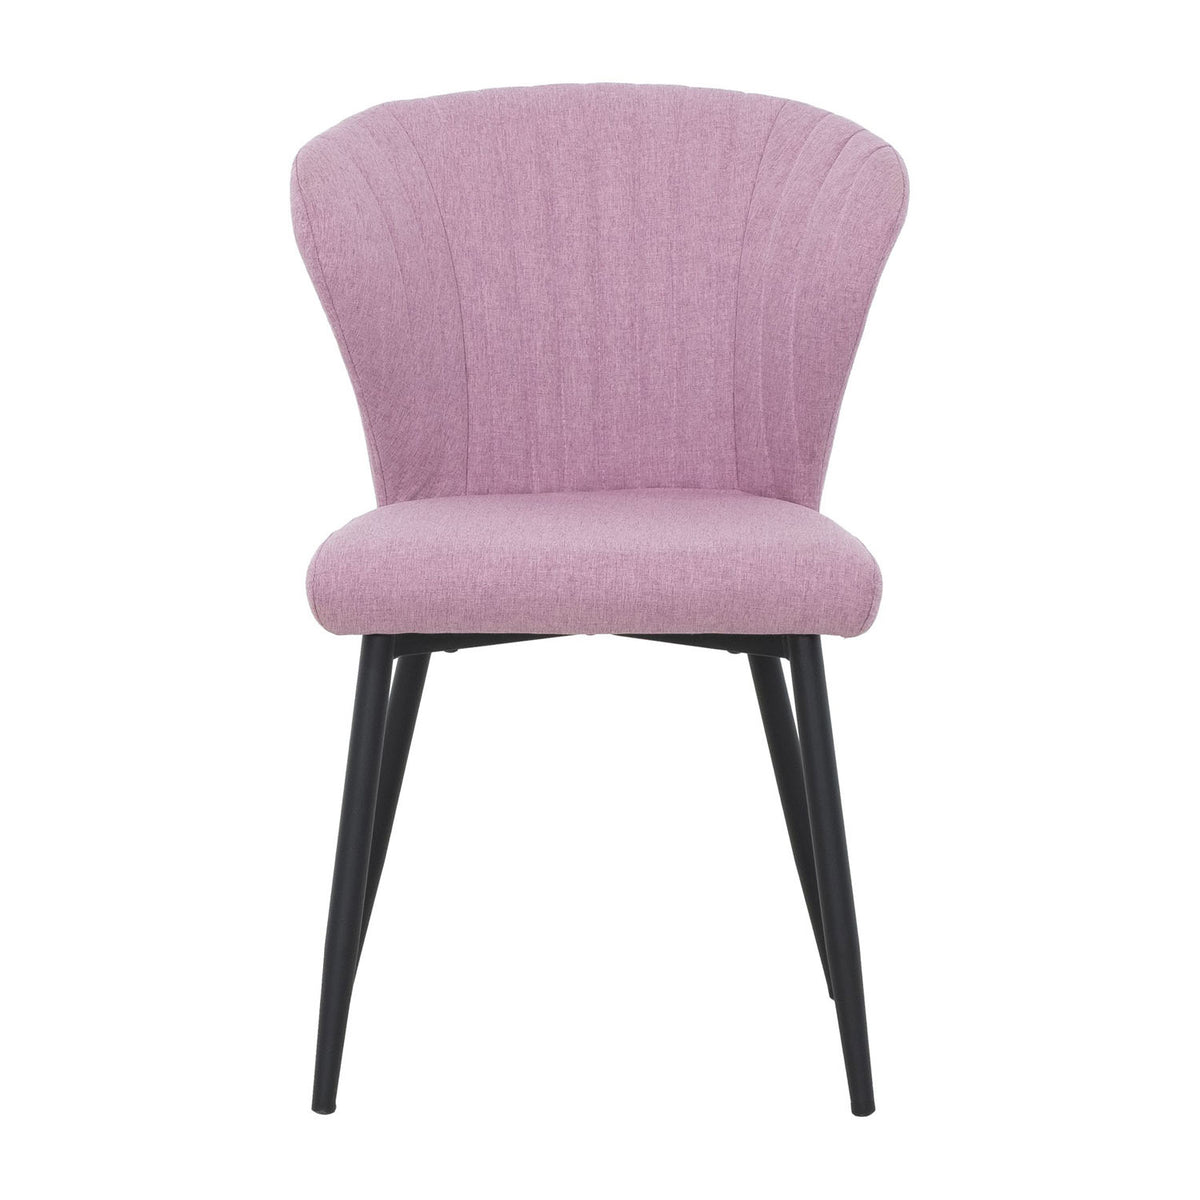 Blush Dining Chair - MJM Furniture